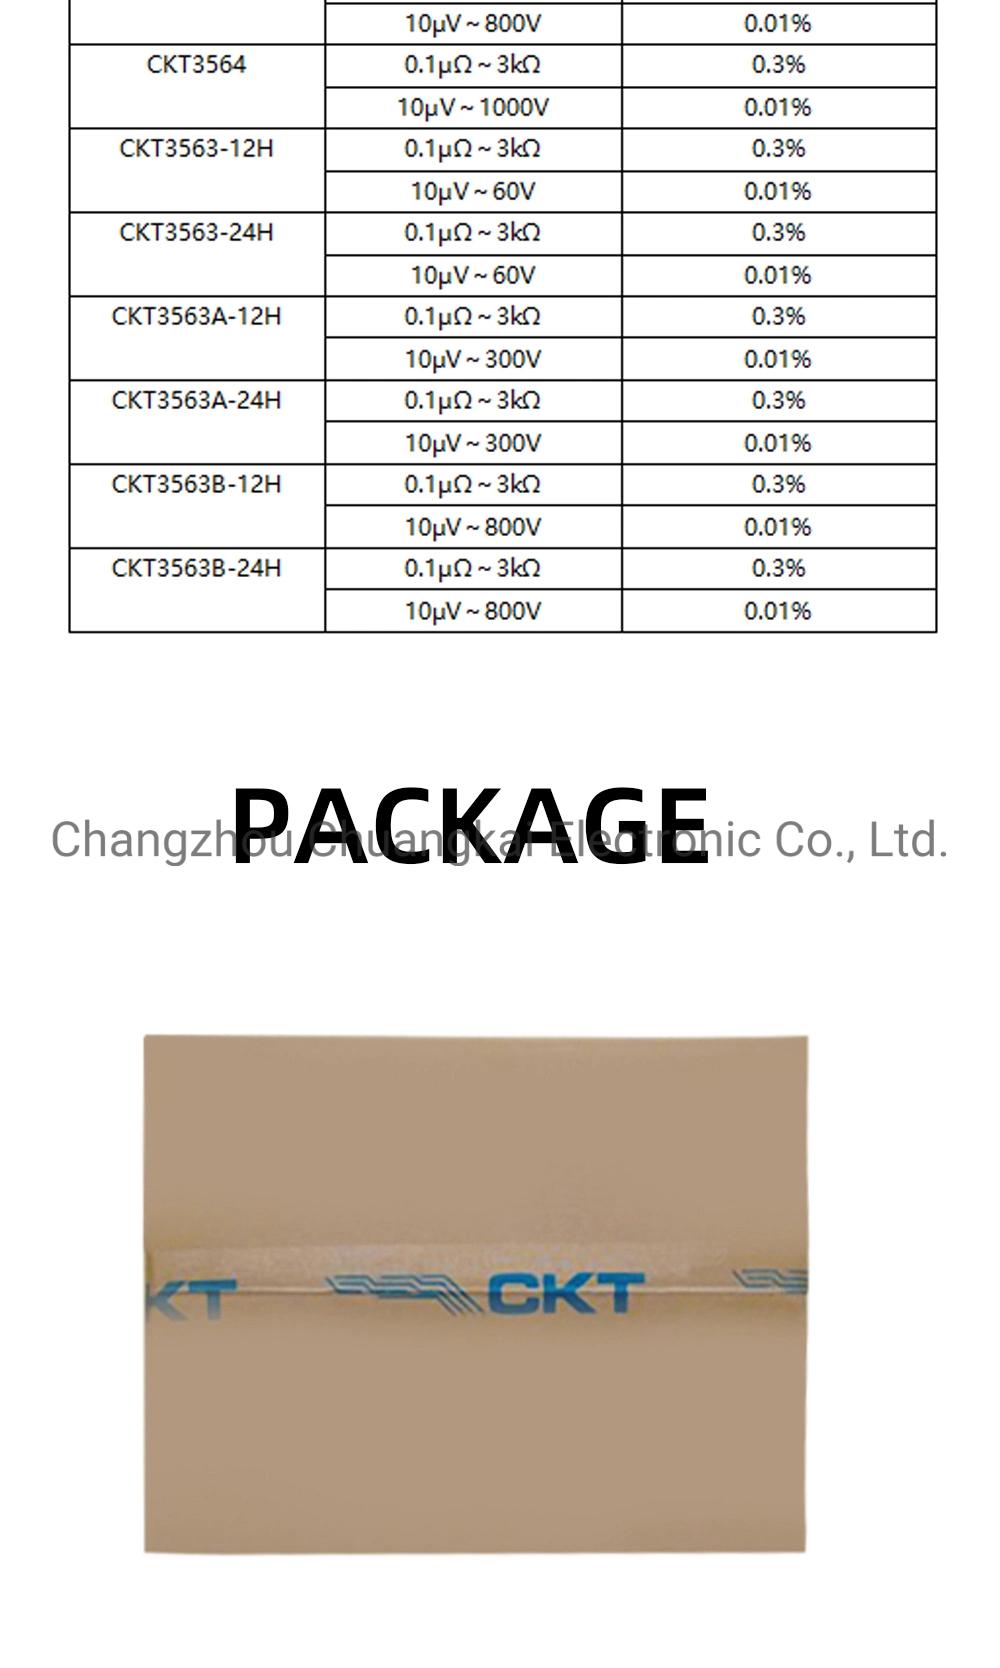 Ckt3563b-24h 48V Battery Tester with 24 Channels Battery Test Instrument